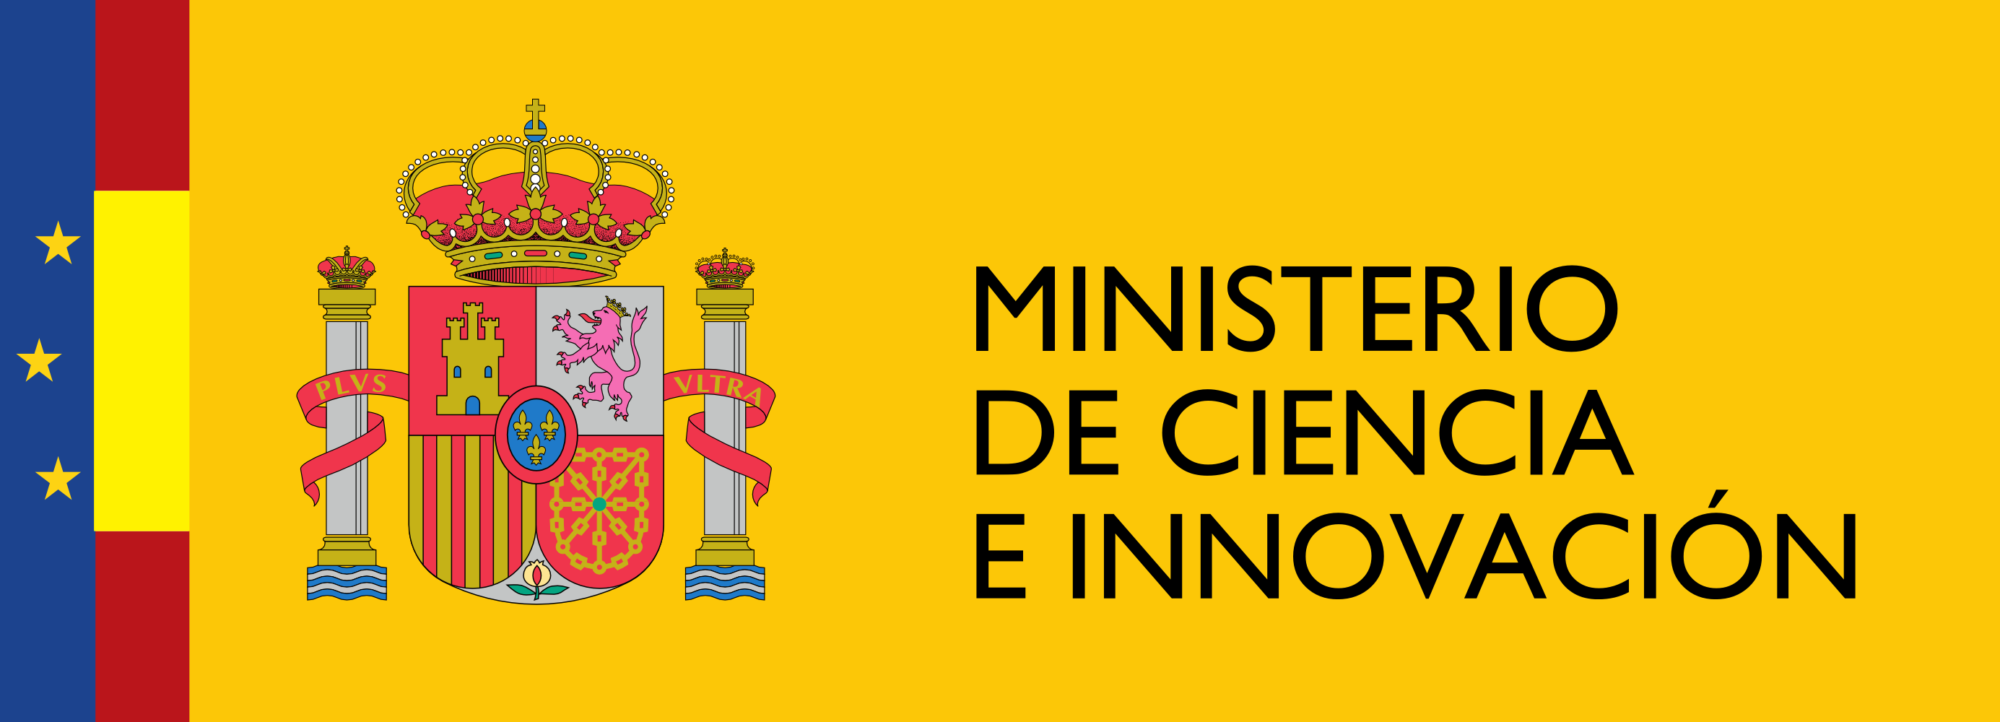 logotipo_del_ministerio_de_ciencia_e_innovación-e1559724303433